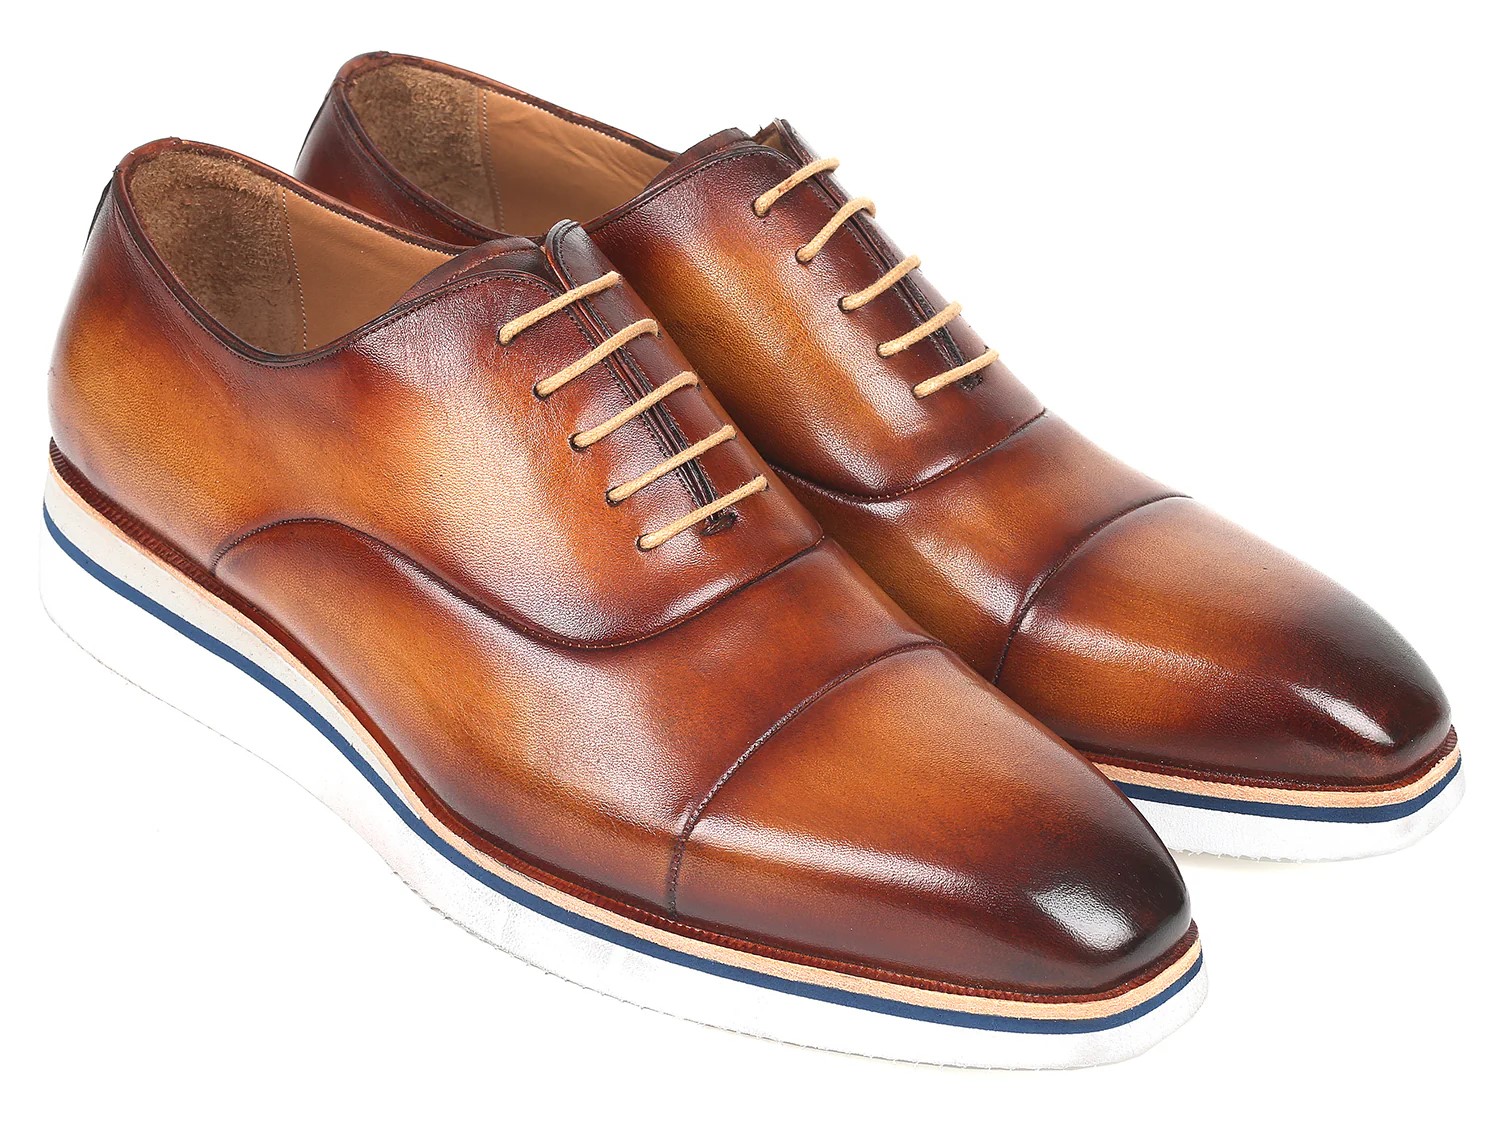 Paul Parkman Brown / Camel Genuine Leather Men's Smart Oxford Casual Shoes 185-BRW-LTH